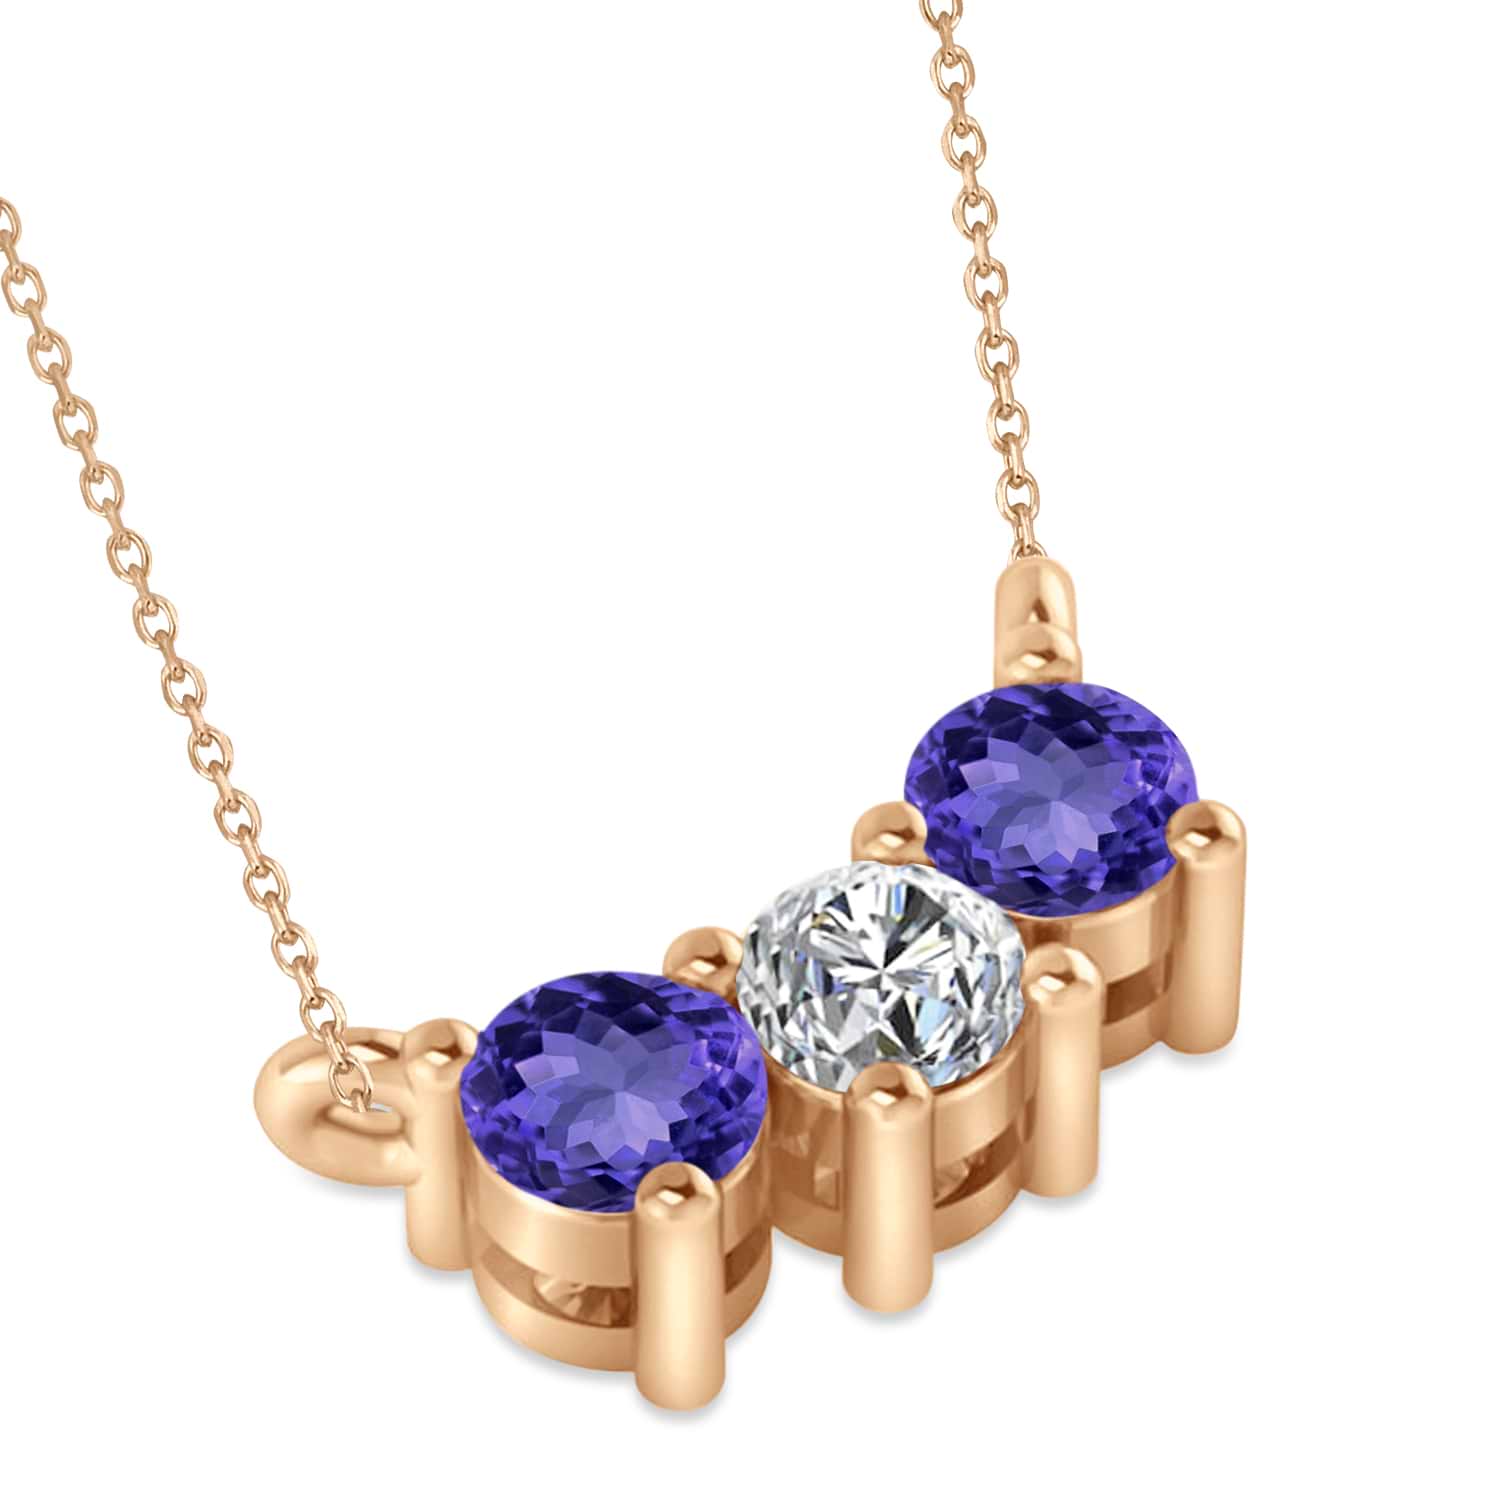 Three Stone Diamond & Tanzanite Pendant Necklace 14k Rose Gold (0.45ct)